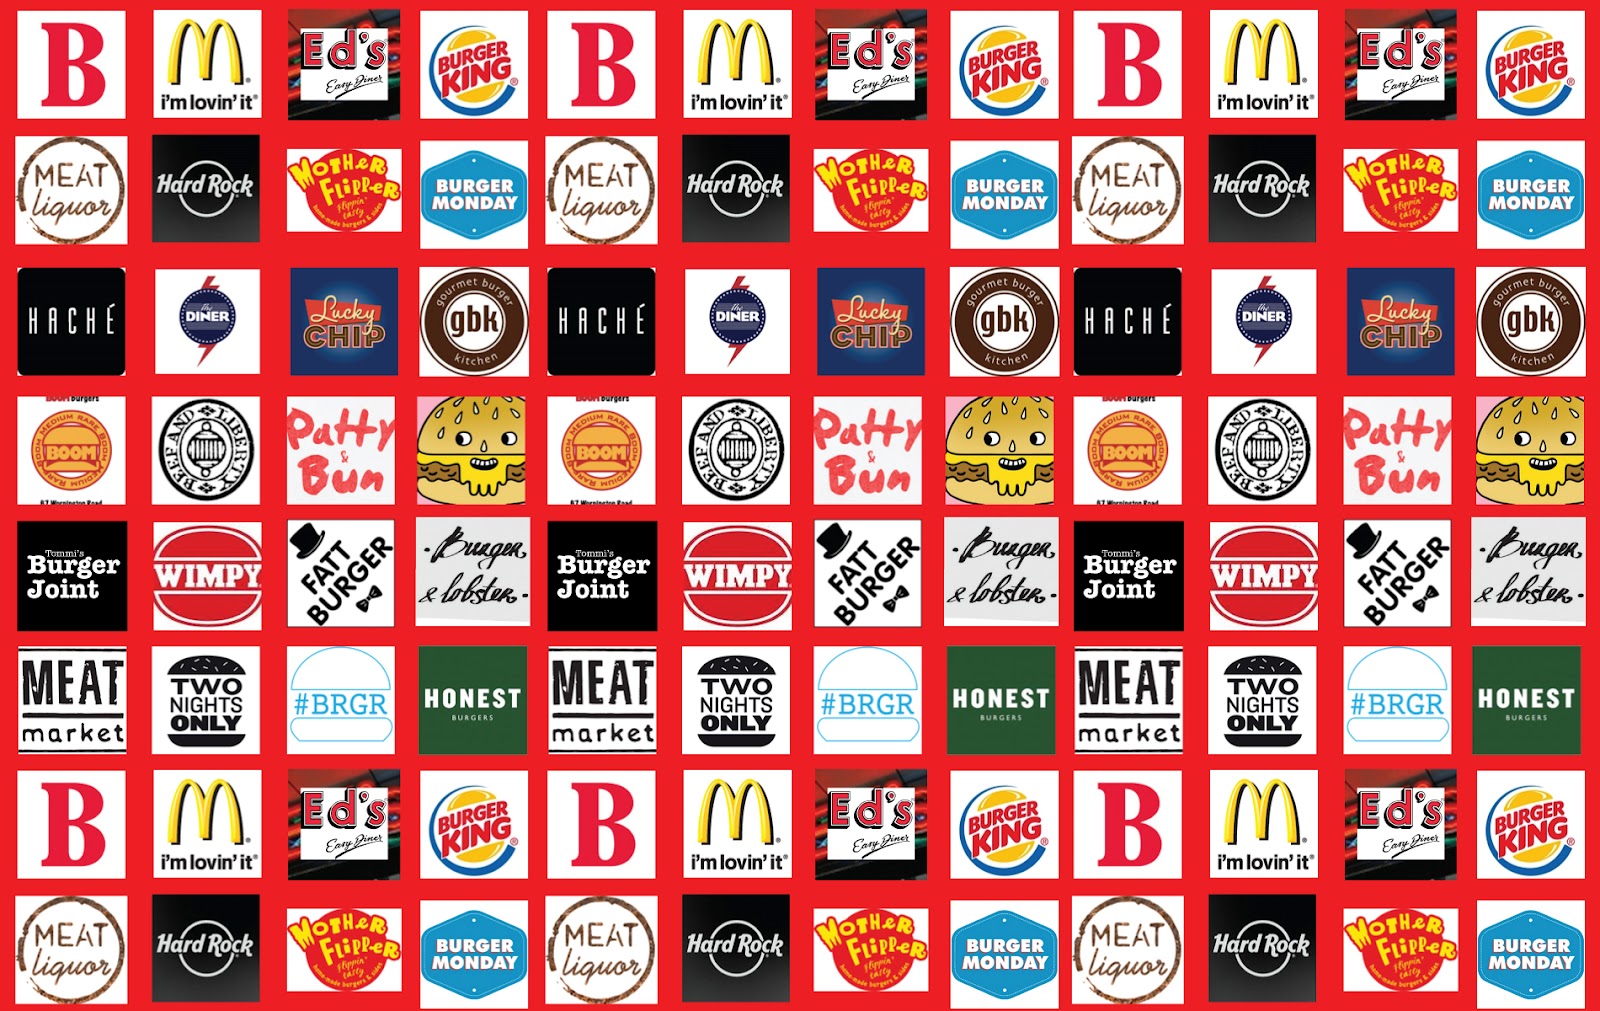 http://4.bp.blogspot.com/-0AYtVTod3oY/UCJ0-2Ah30I/AAAAAAAAAMA/TdUpBZWHL-g/s1600/burger-wallpaper.jpg